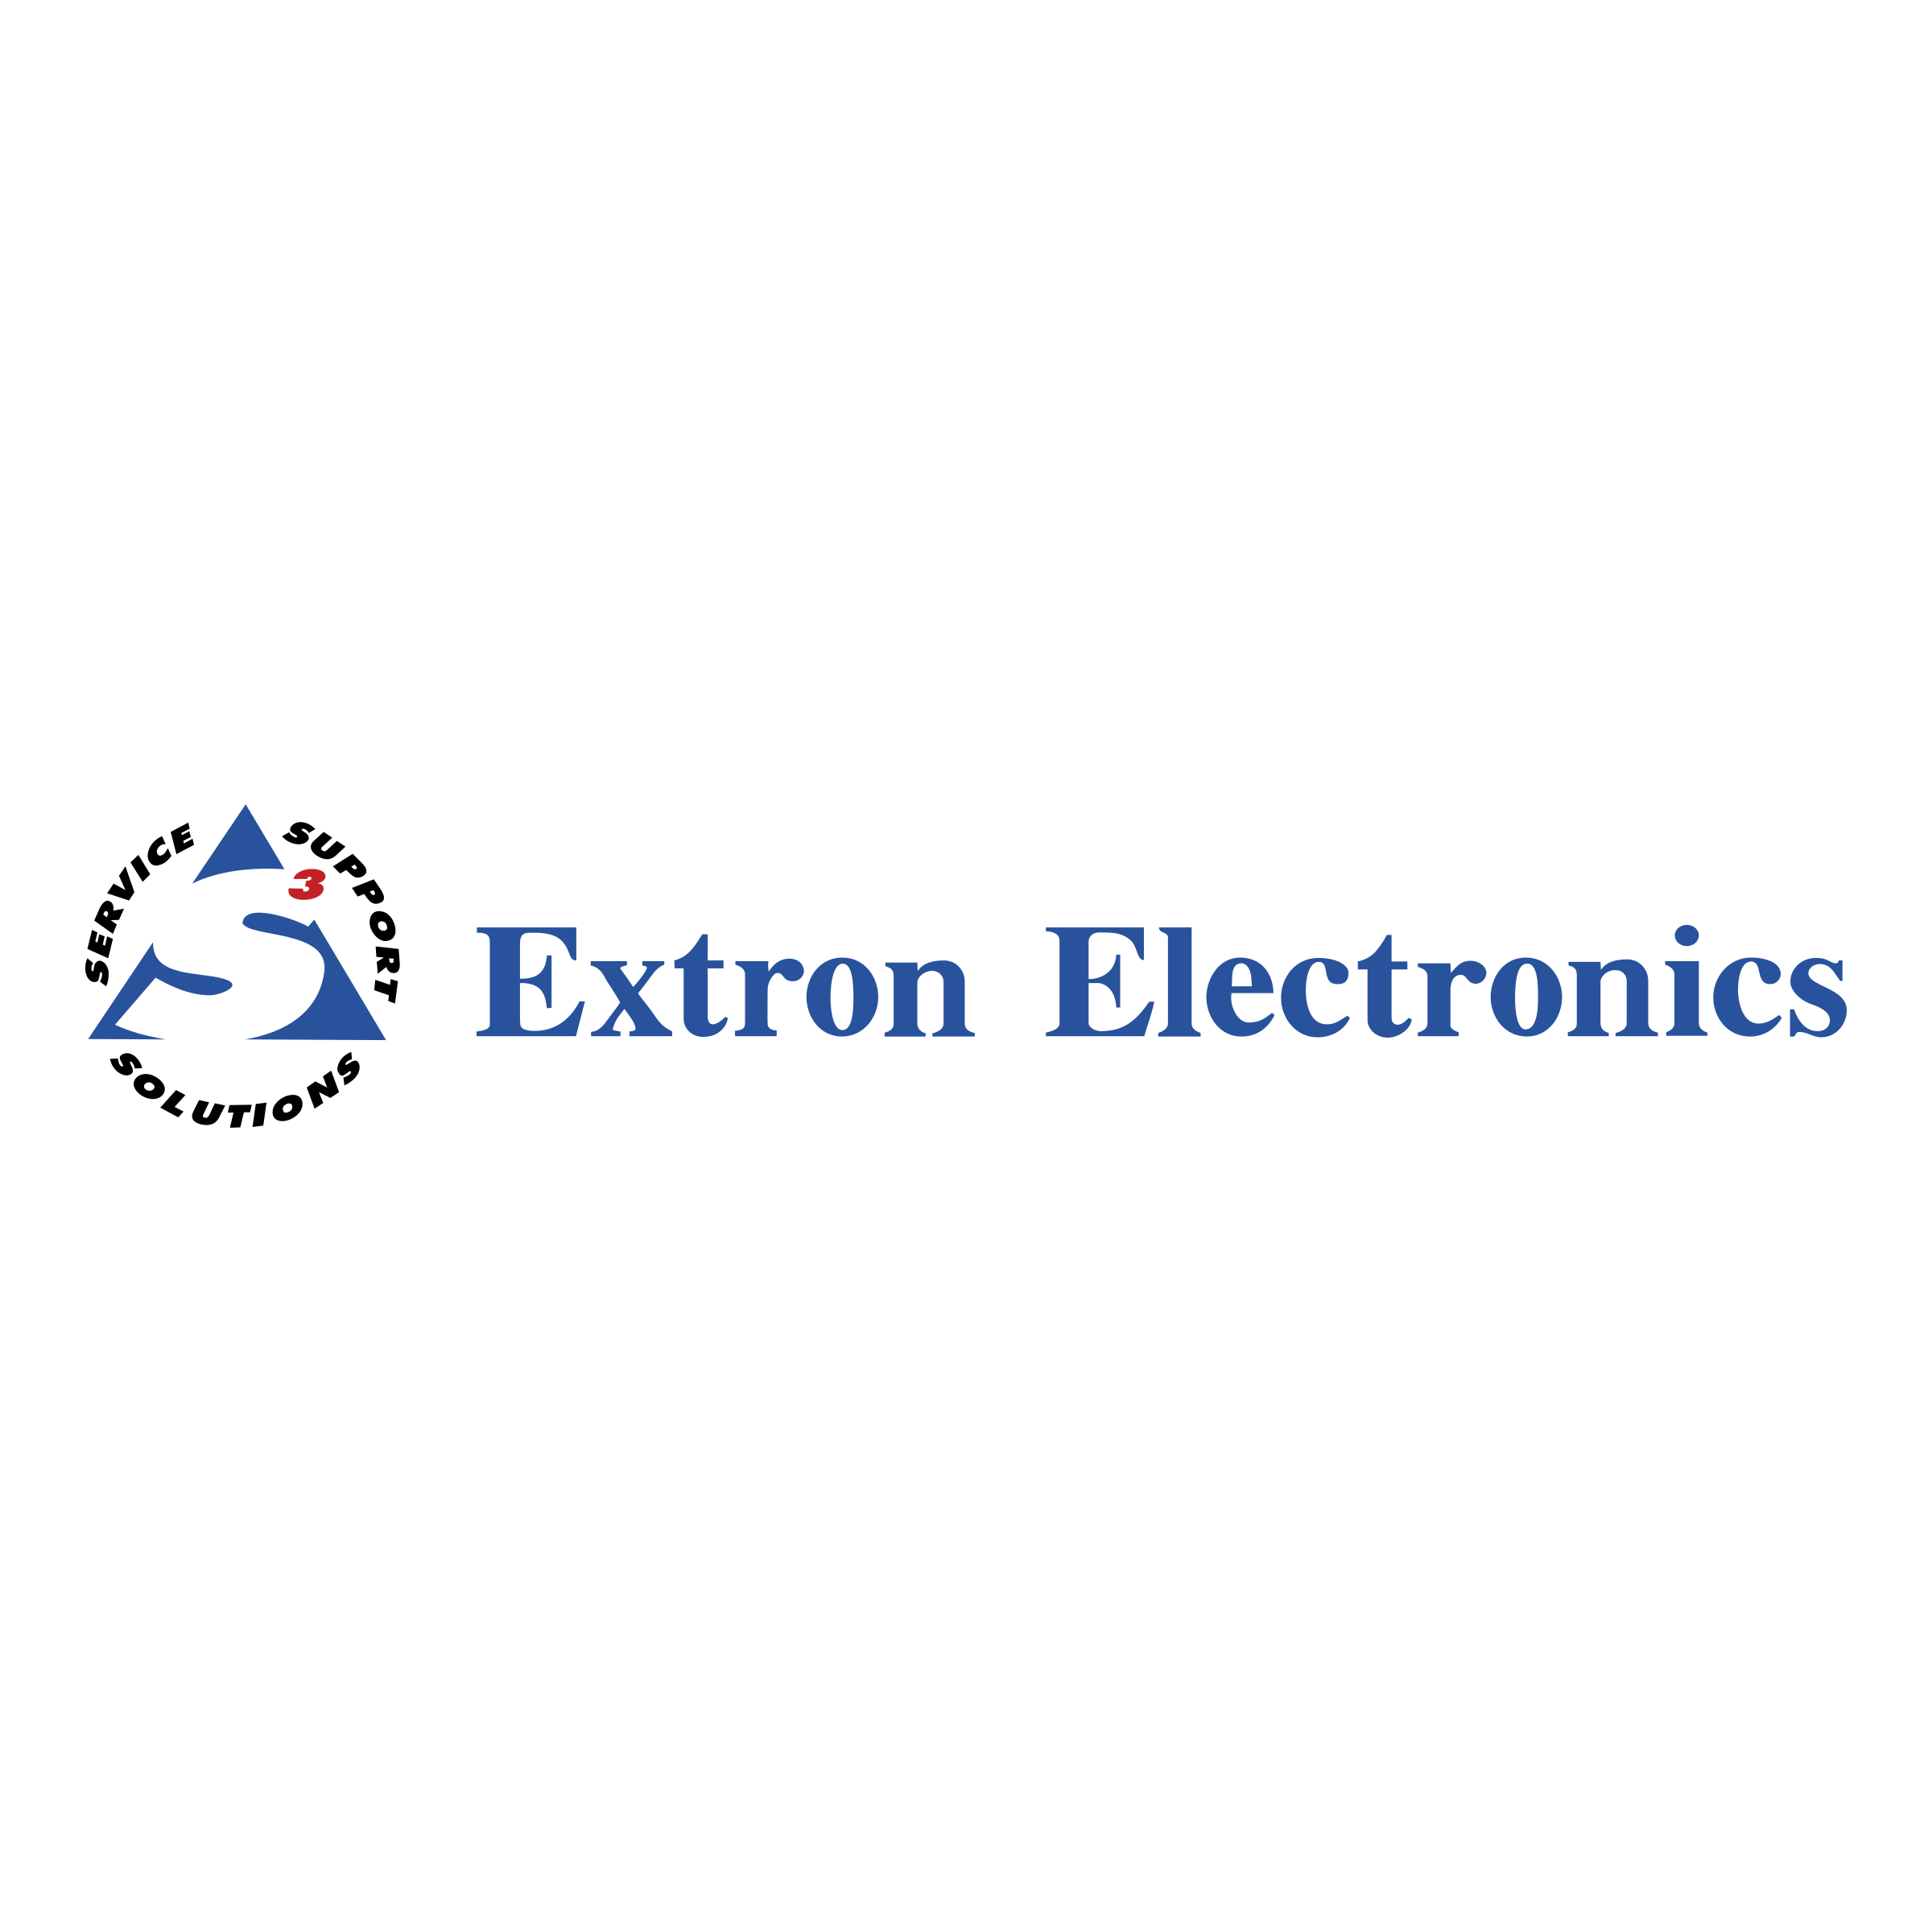 Extron electronic